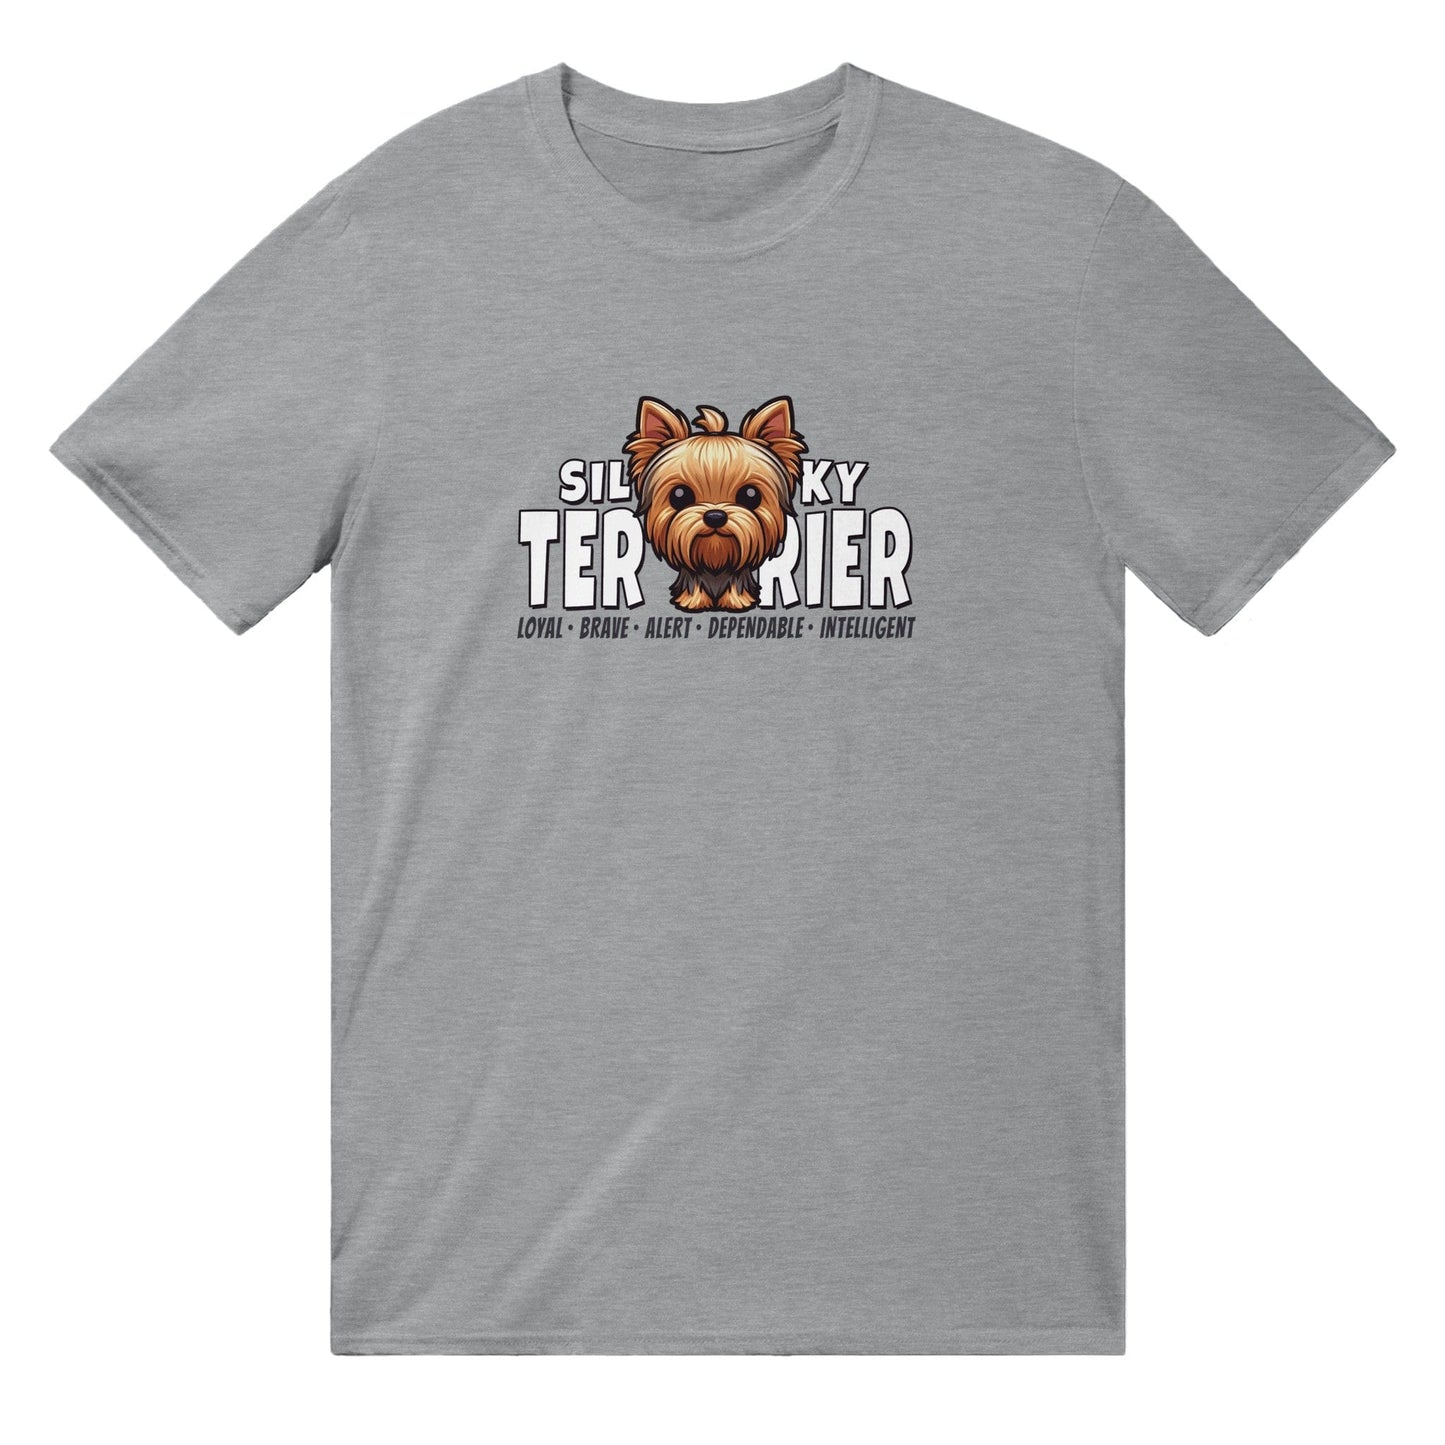 Silky Terrier T-Shirt Graphic Tee Sports Grey / S BC Australia